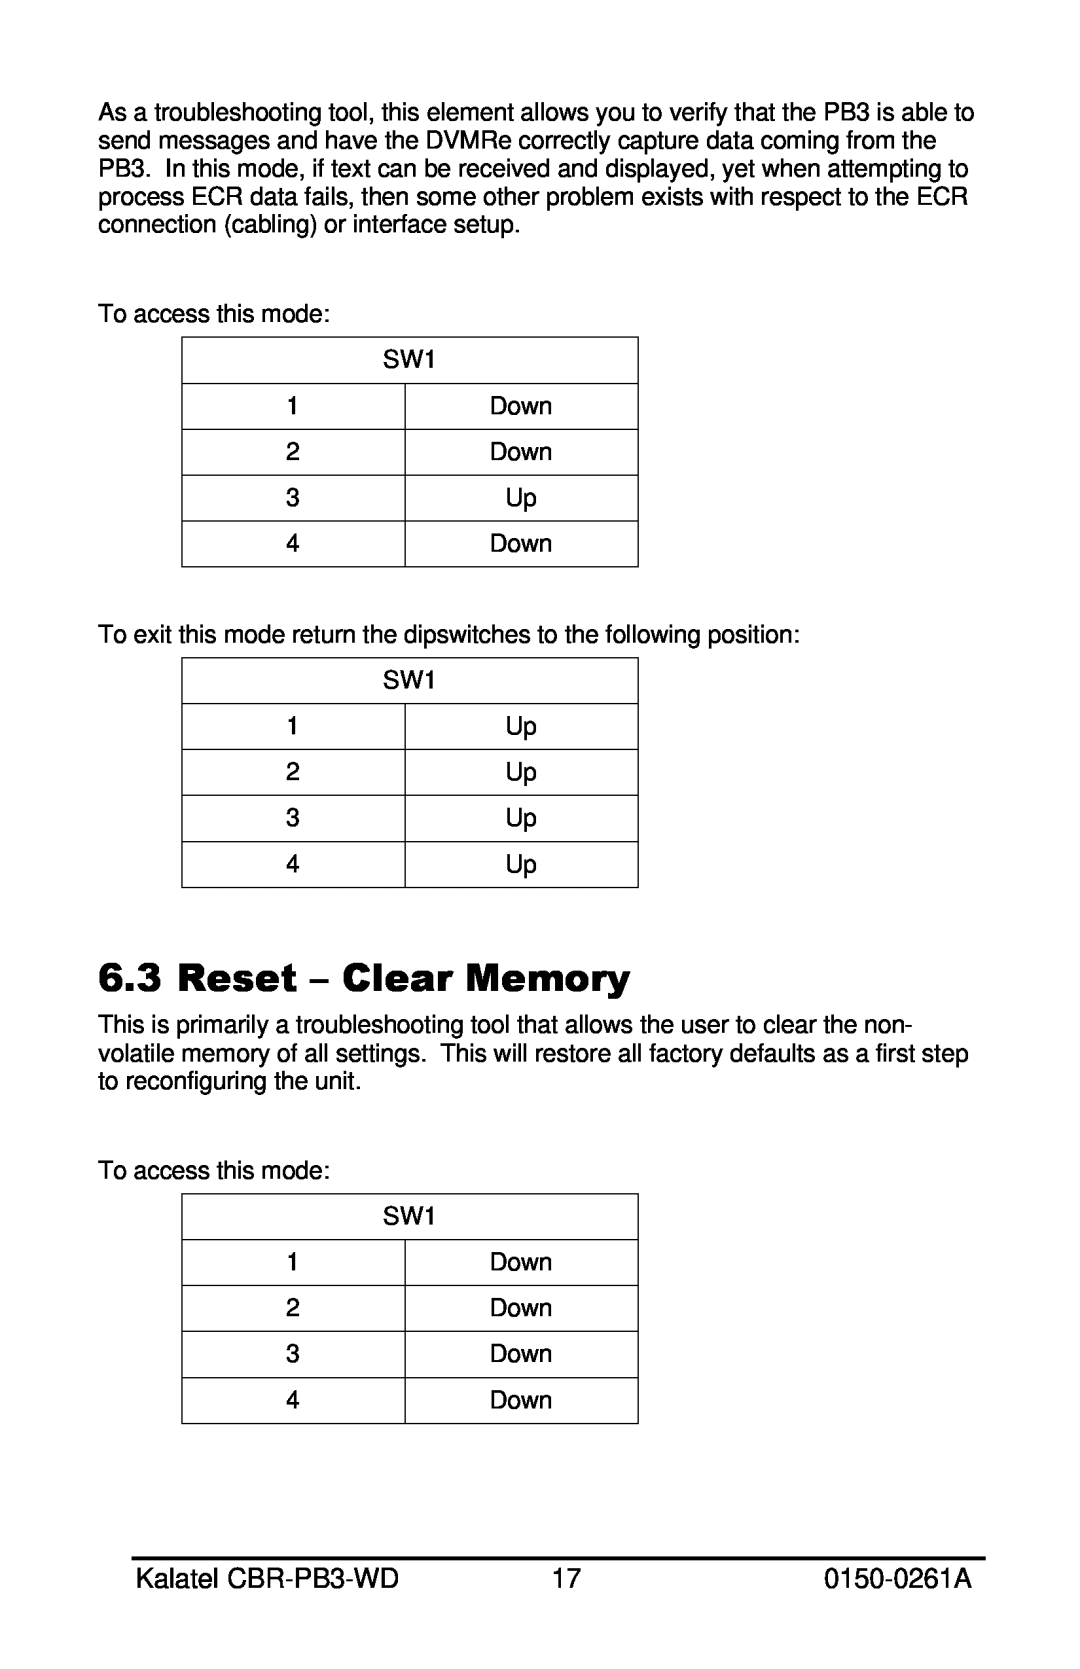 GE installation manual Reset - Clear Memory, Kalatel CBR-PB3-WD, 0150-0261A 